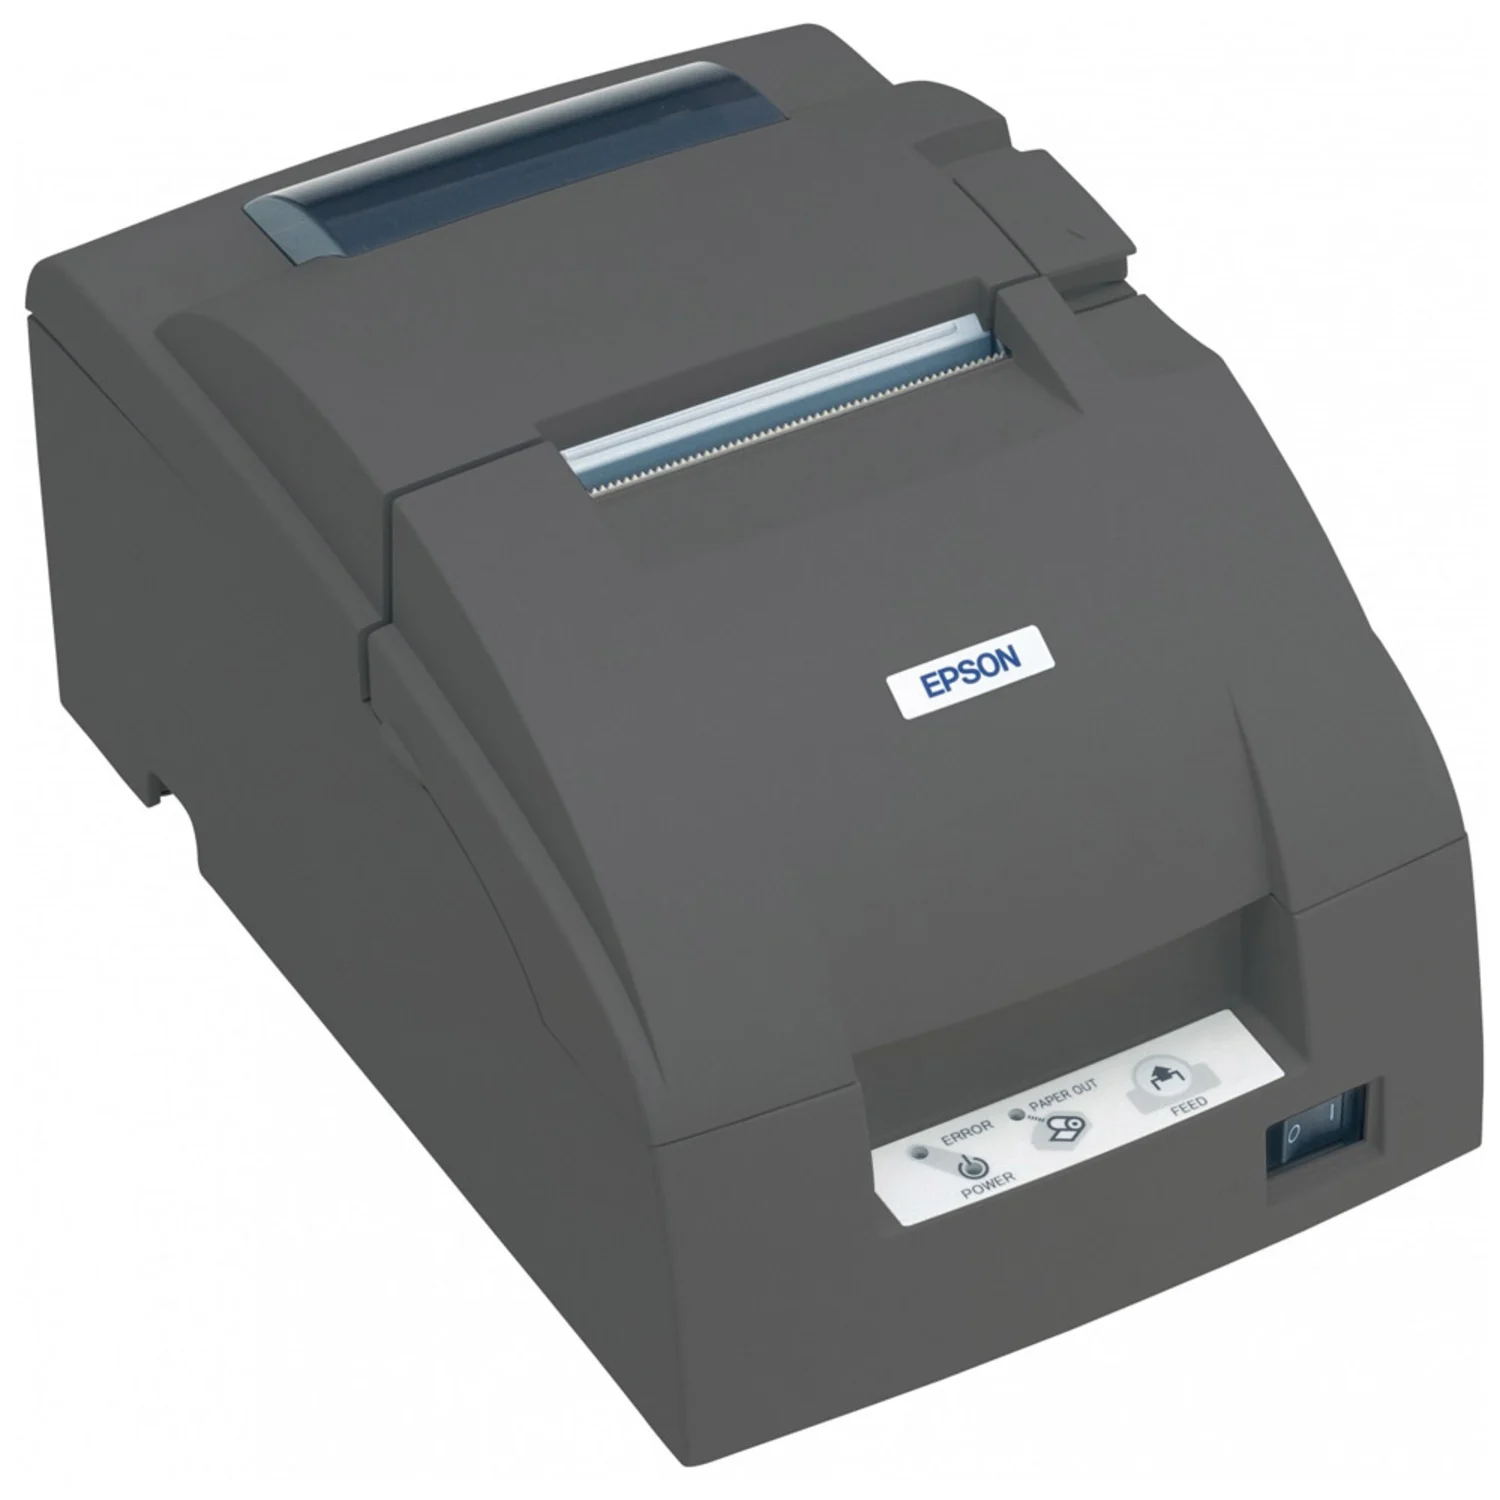 Impressora Epson Tmu220d-806 Usb / Bivolt - Cinza